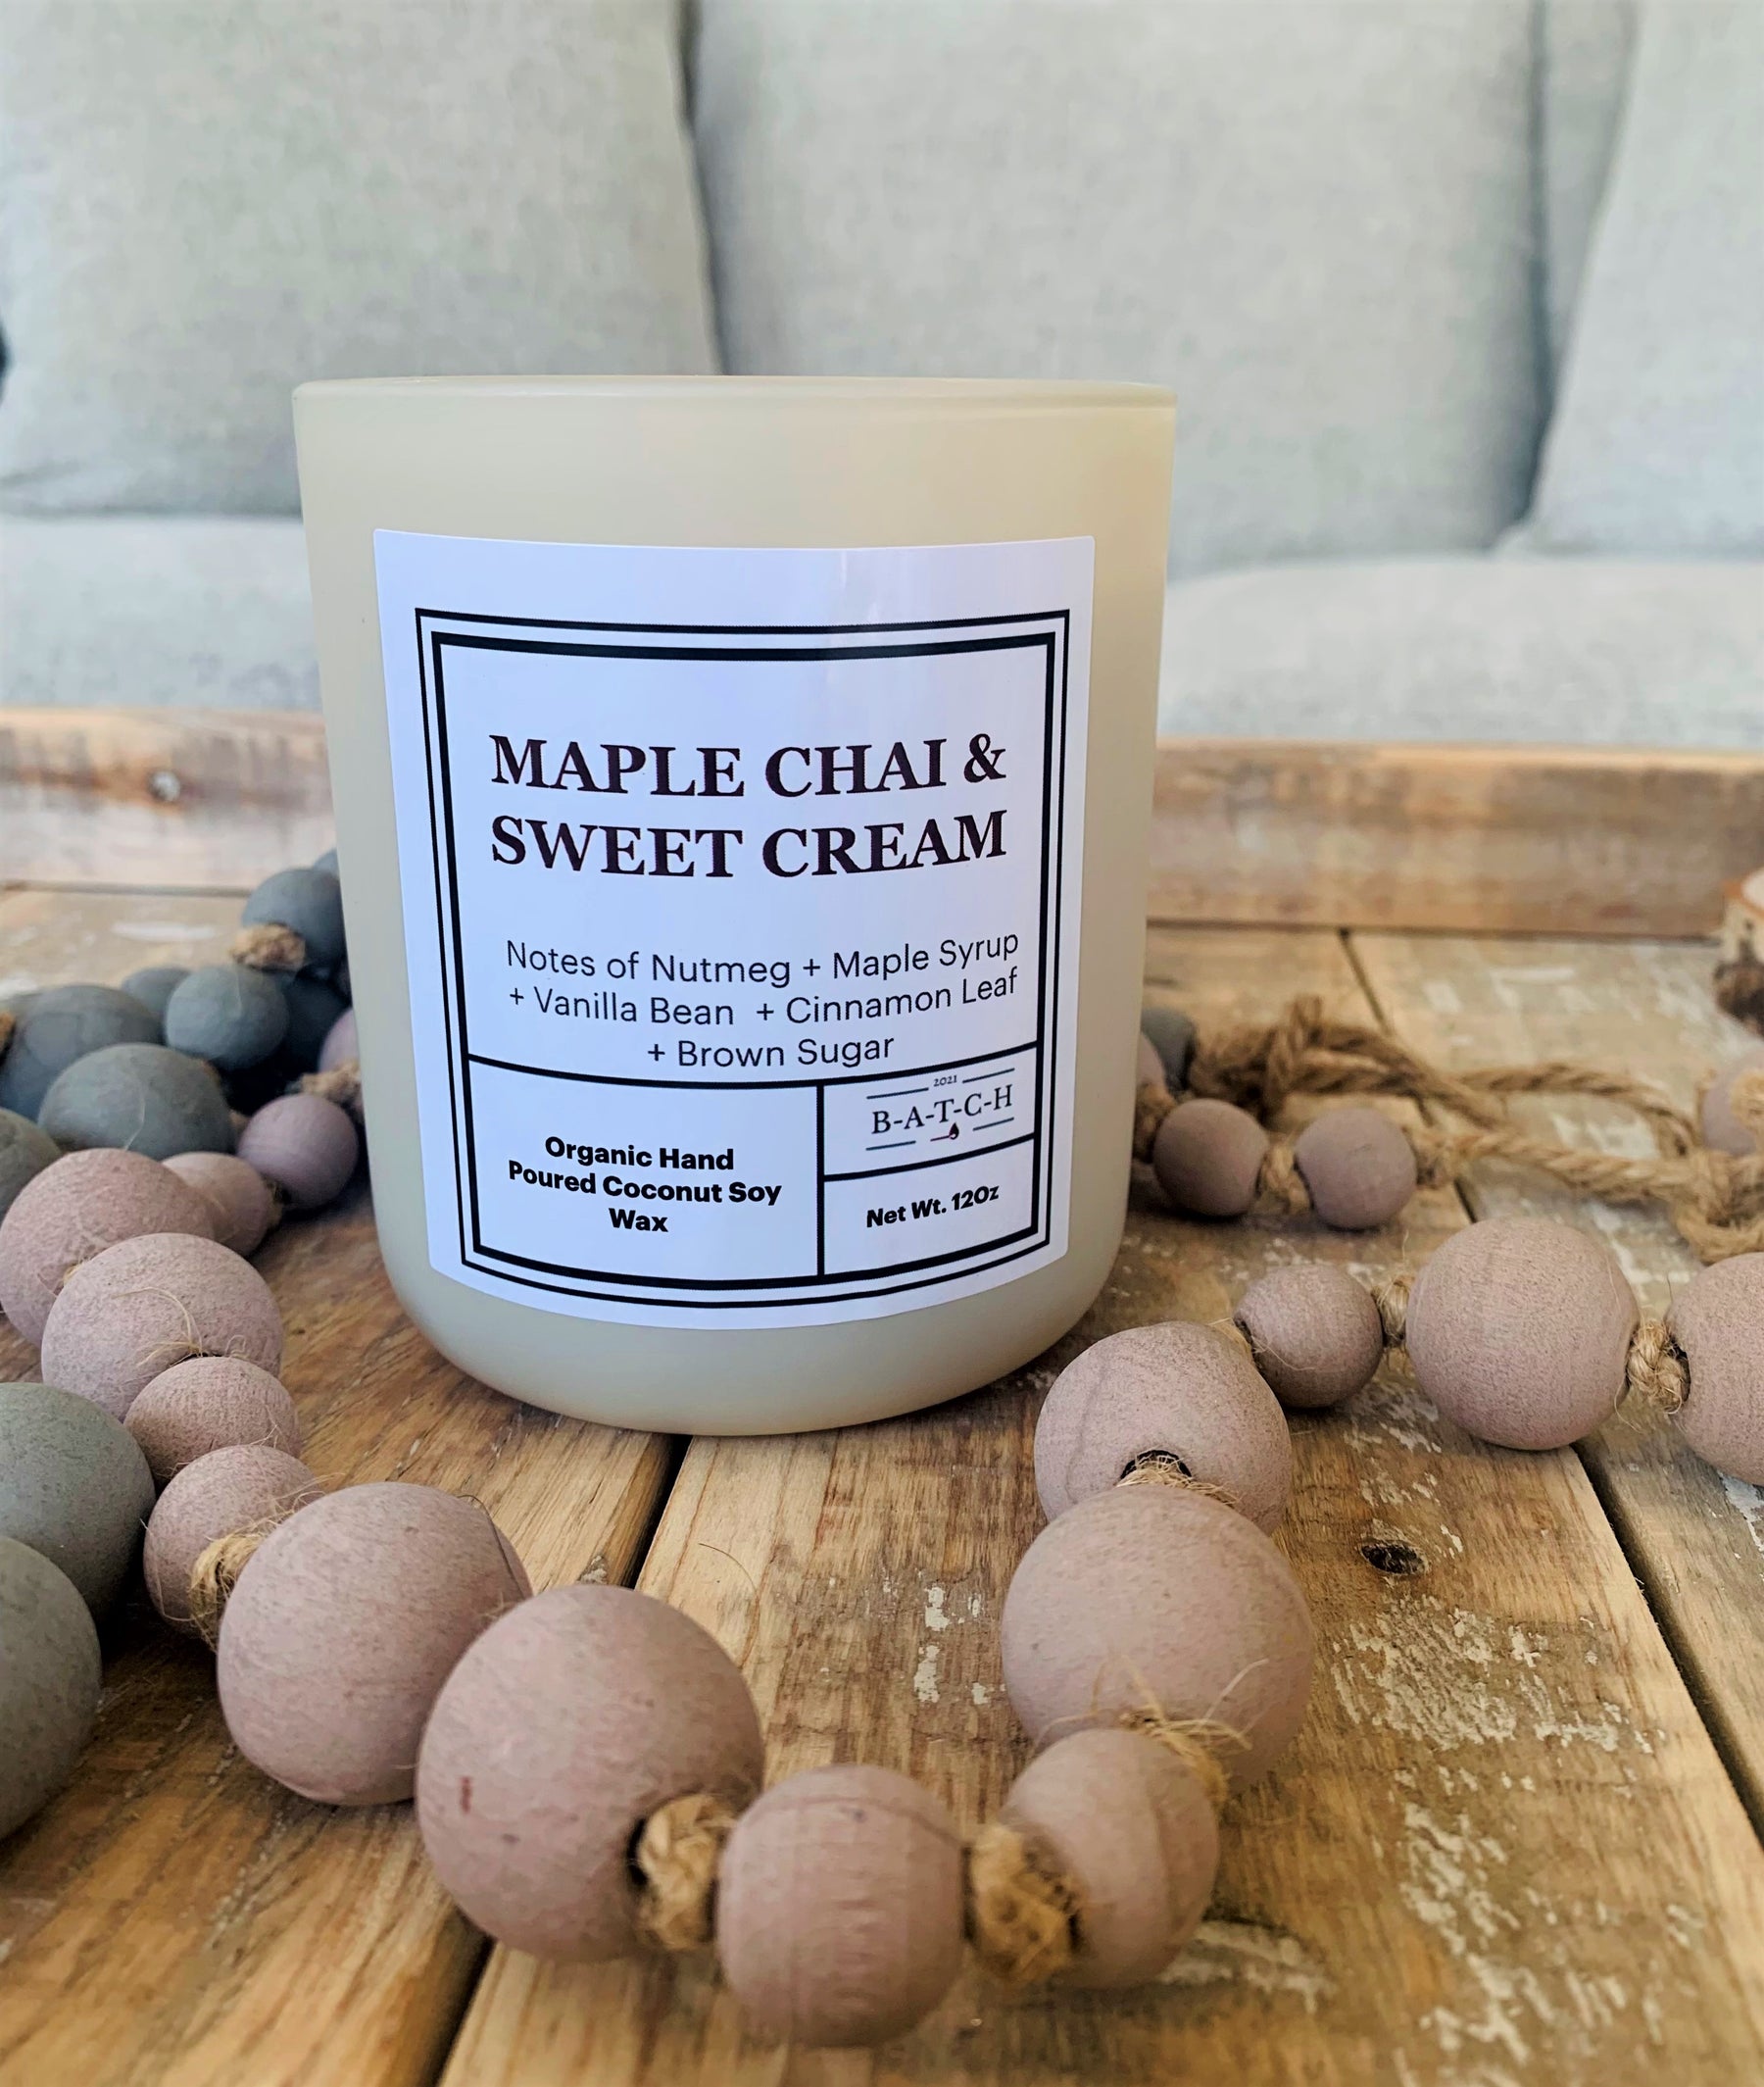 Maple Chai & Sweet Cream